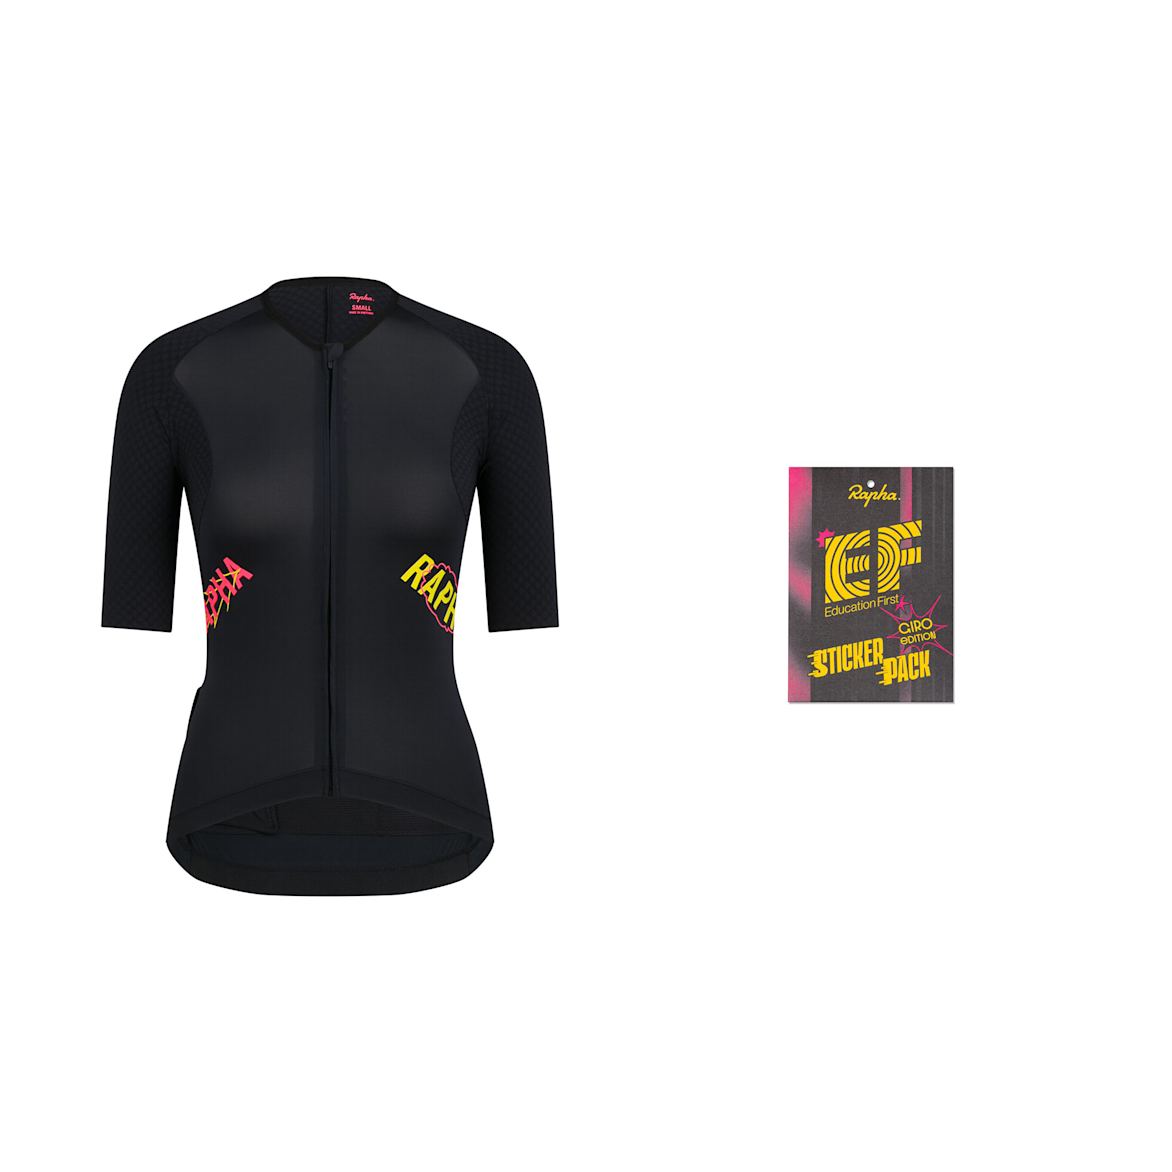 EF Women's Pro Team Aero Jersey Switch-out + FREE Sticker Pack